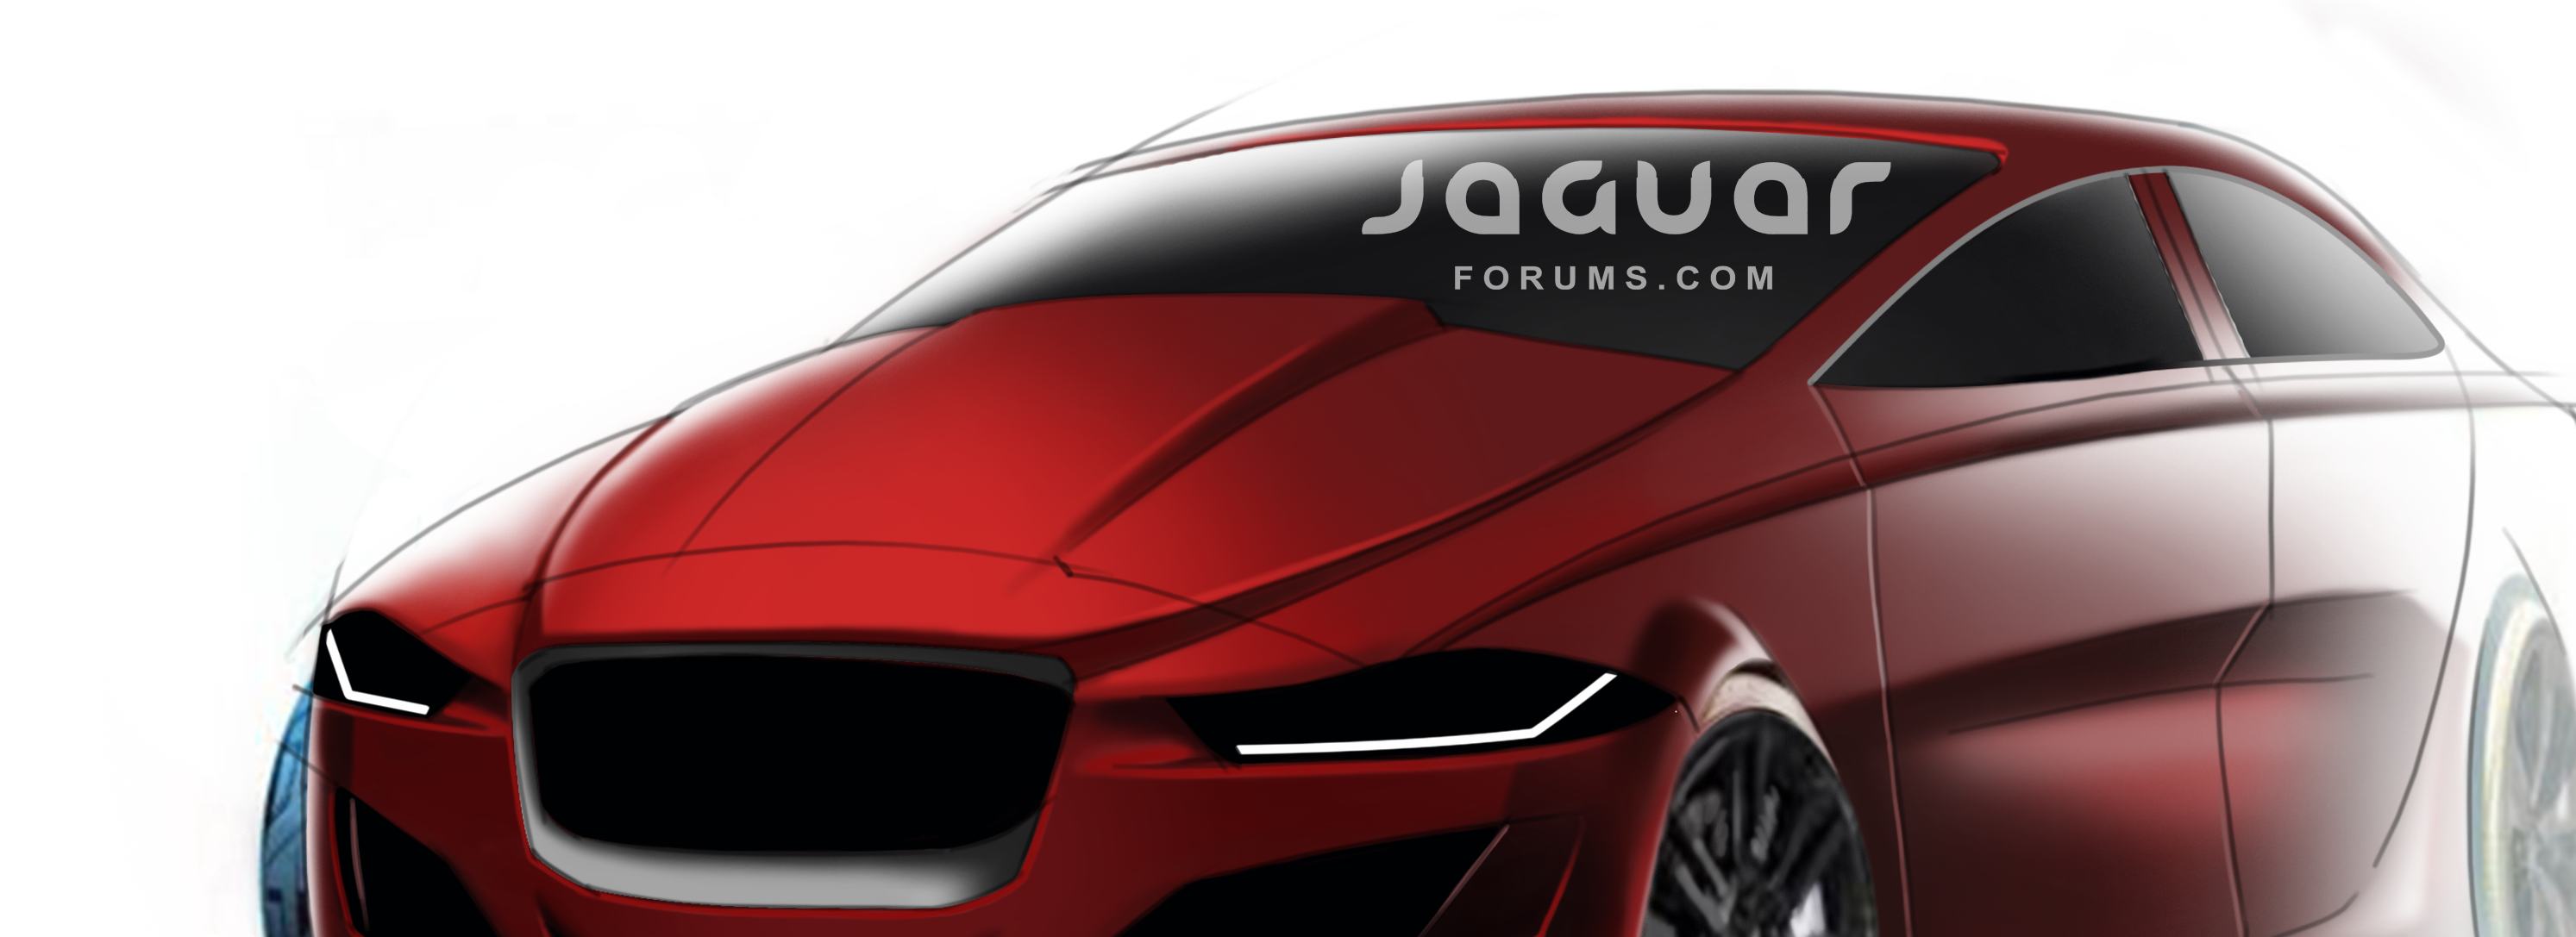 jaguar_xe_featured